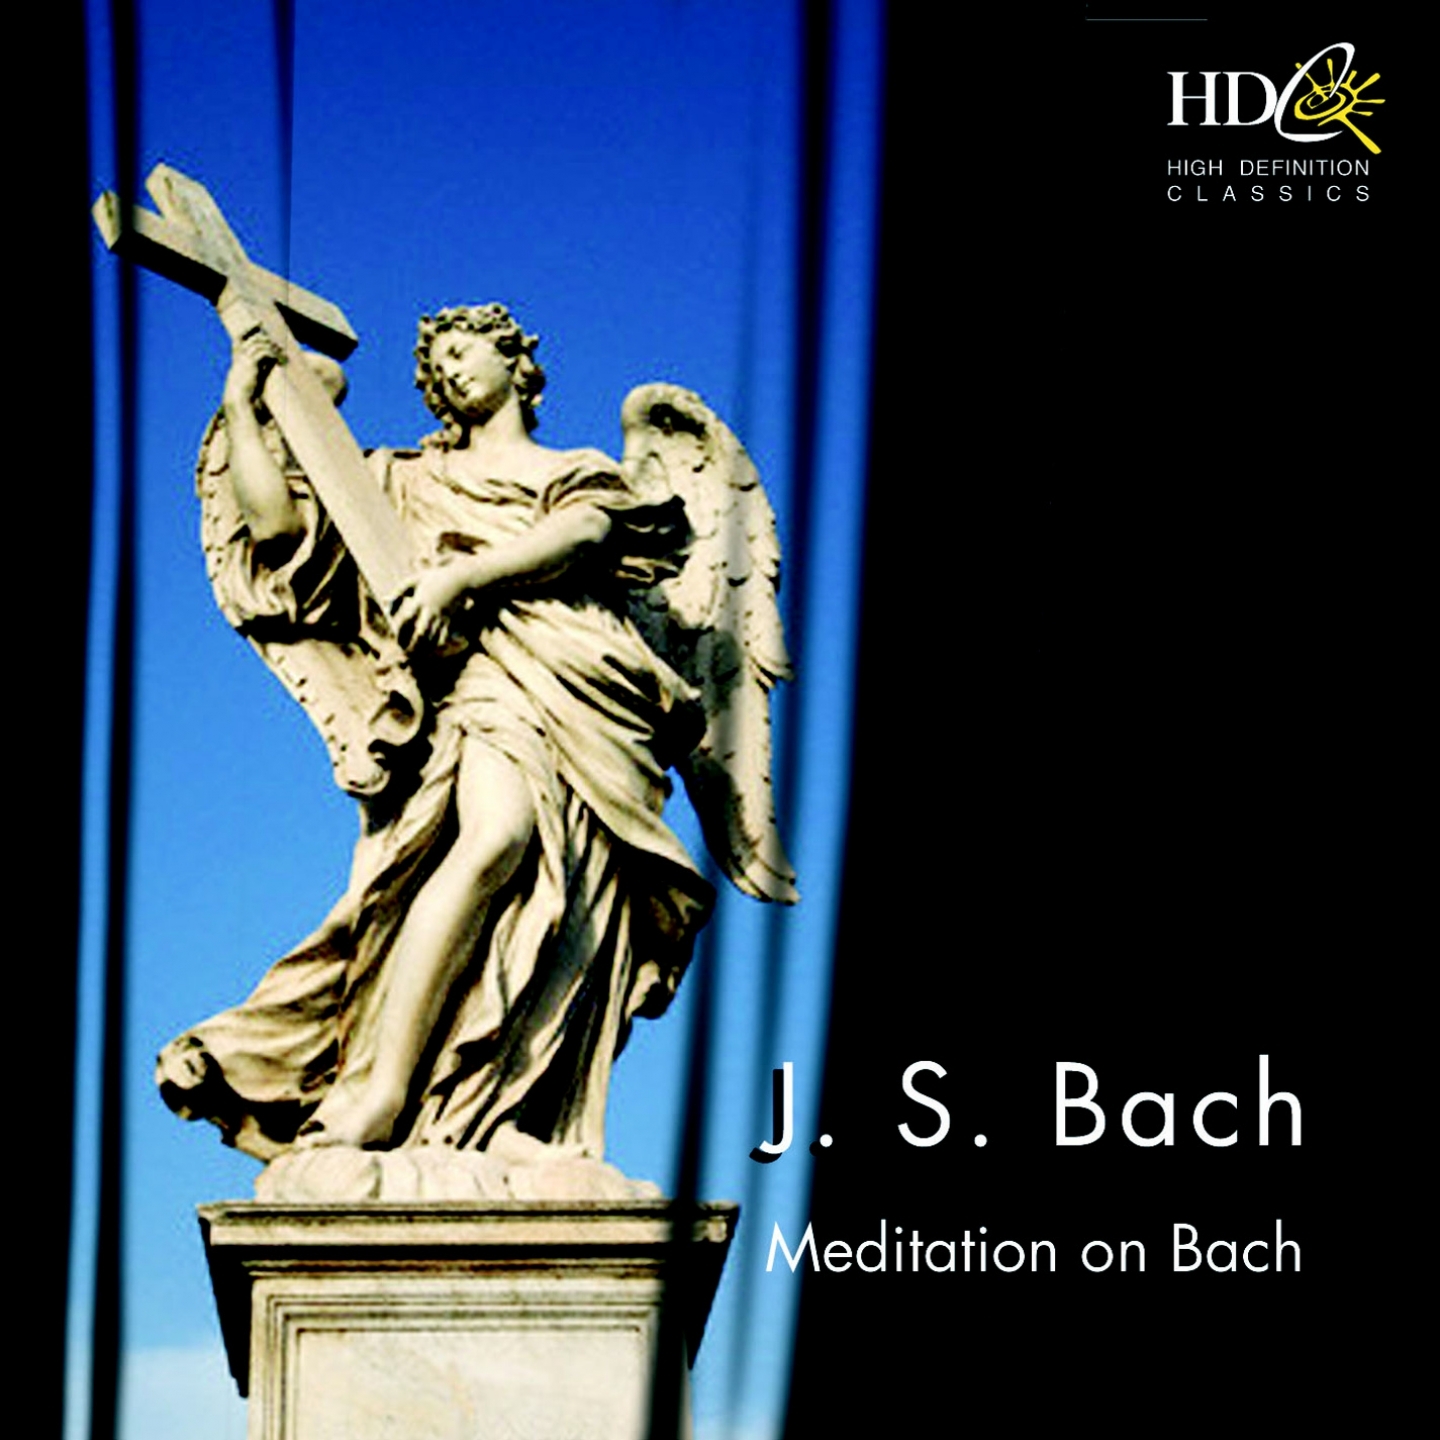 Meditation on Bach